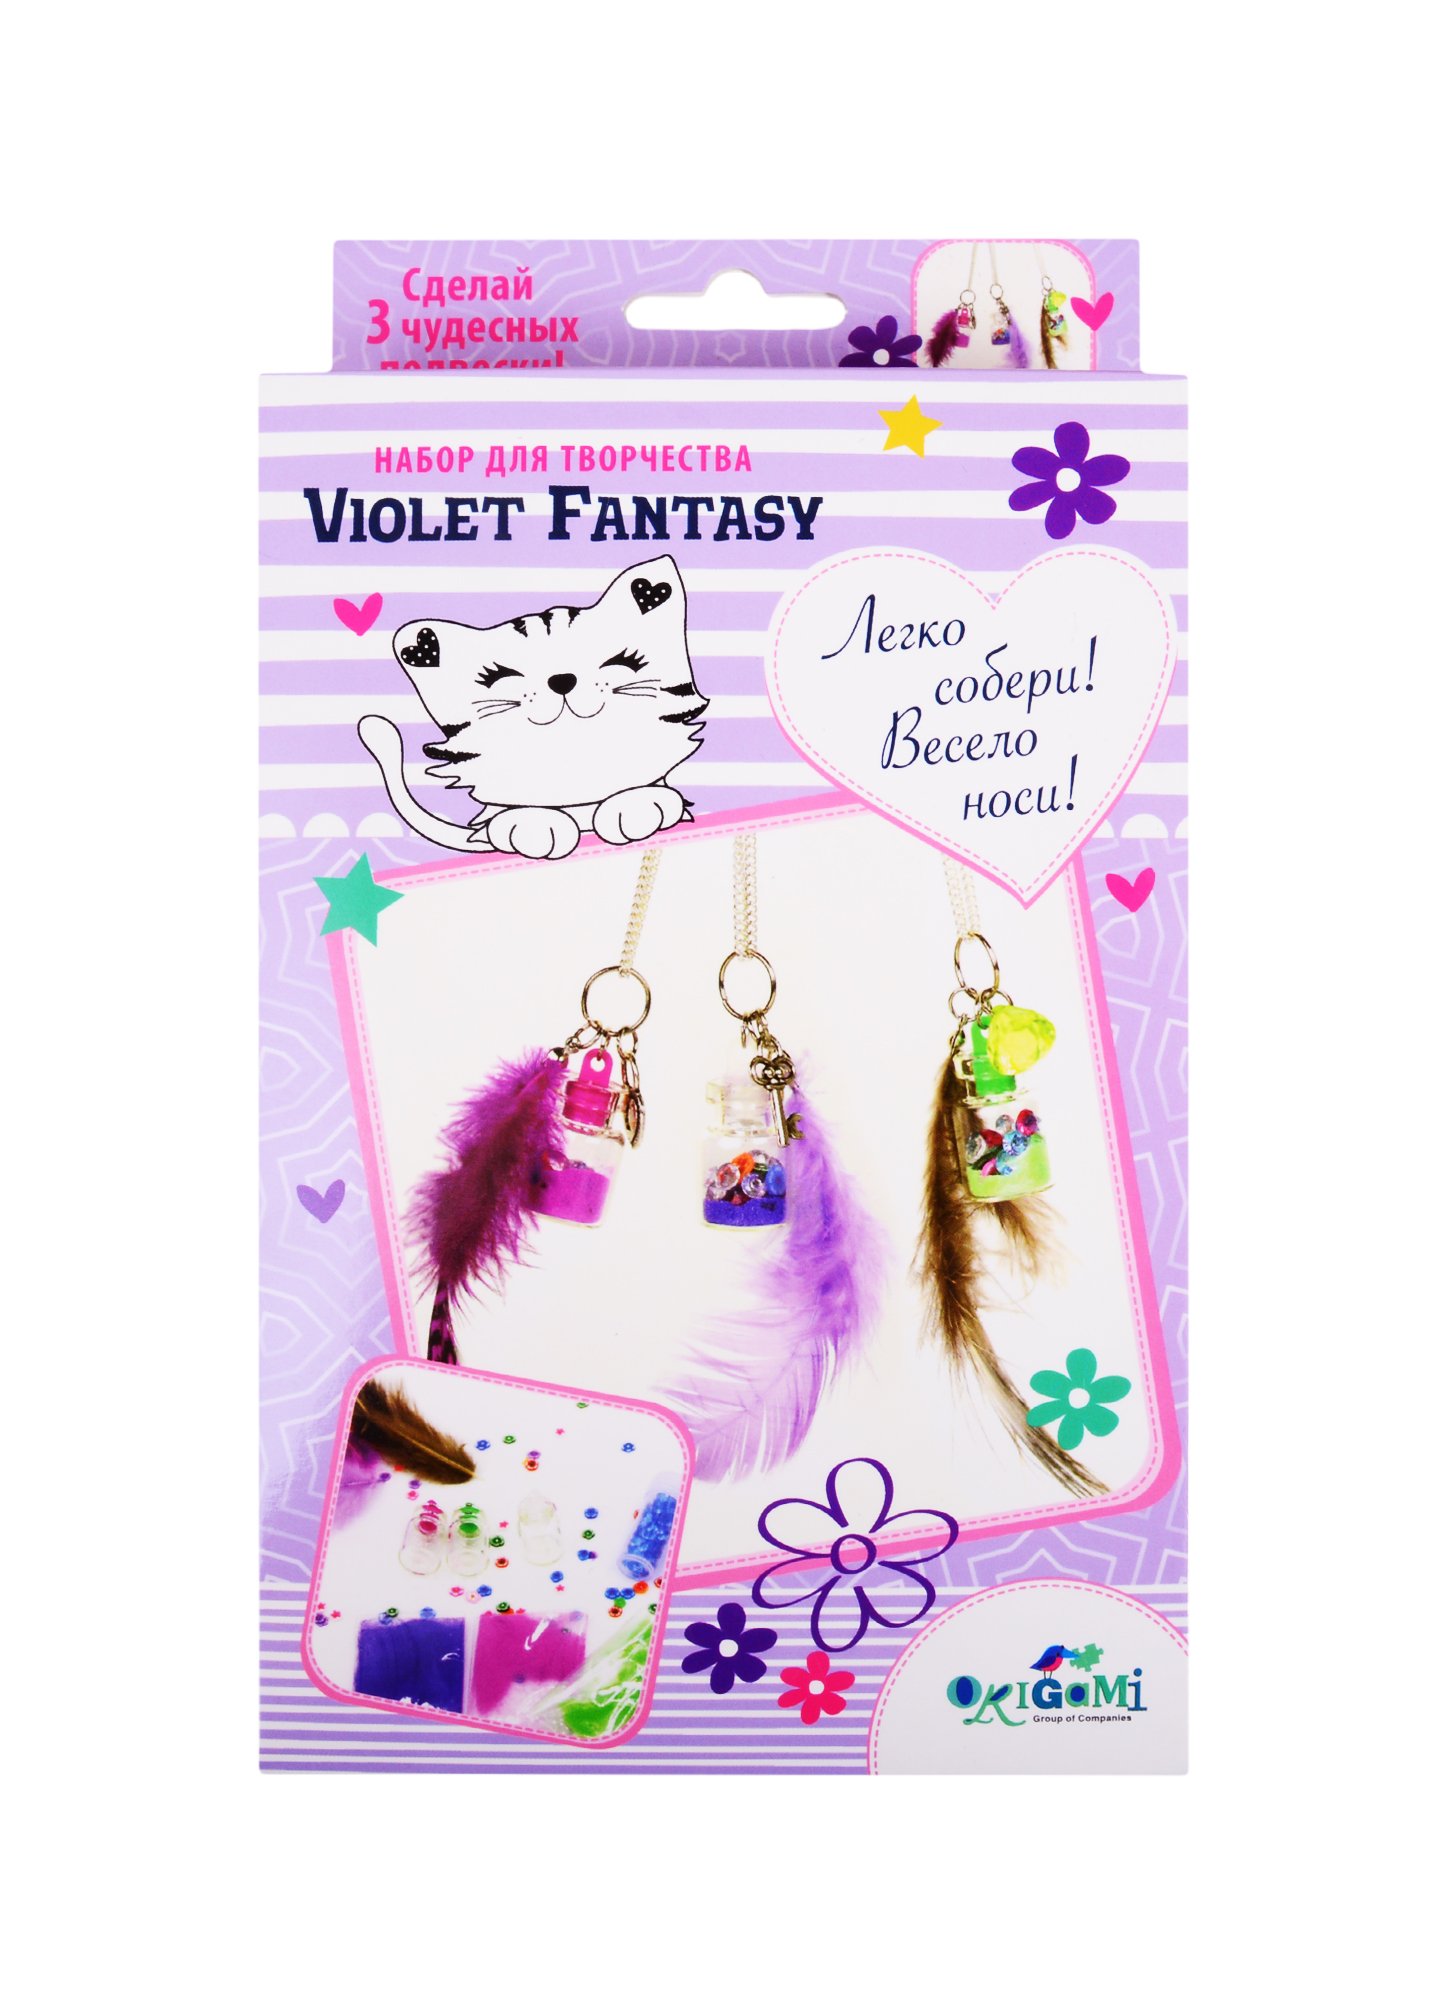    .  . Violet Fantasy